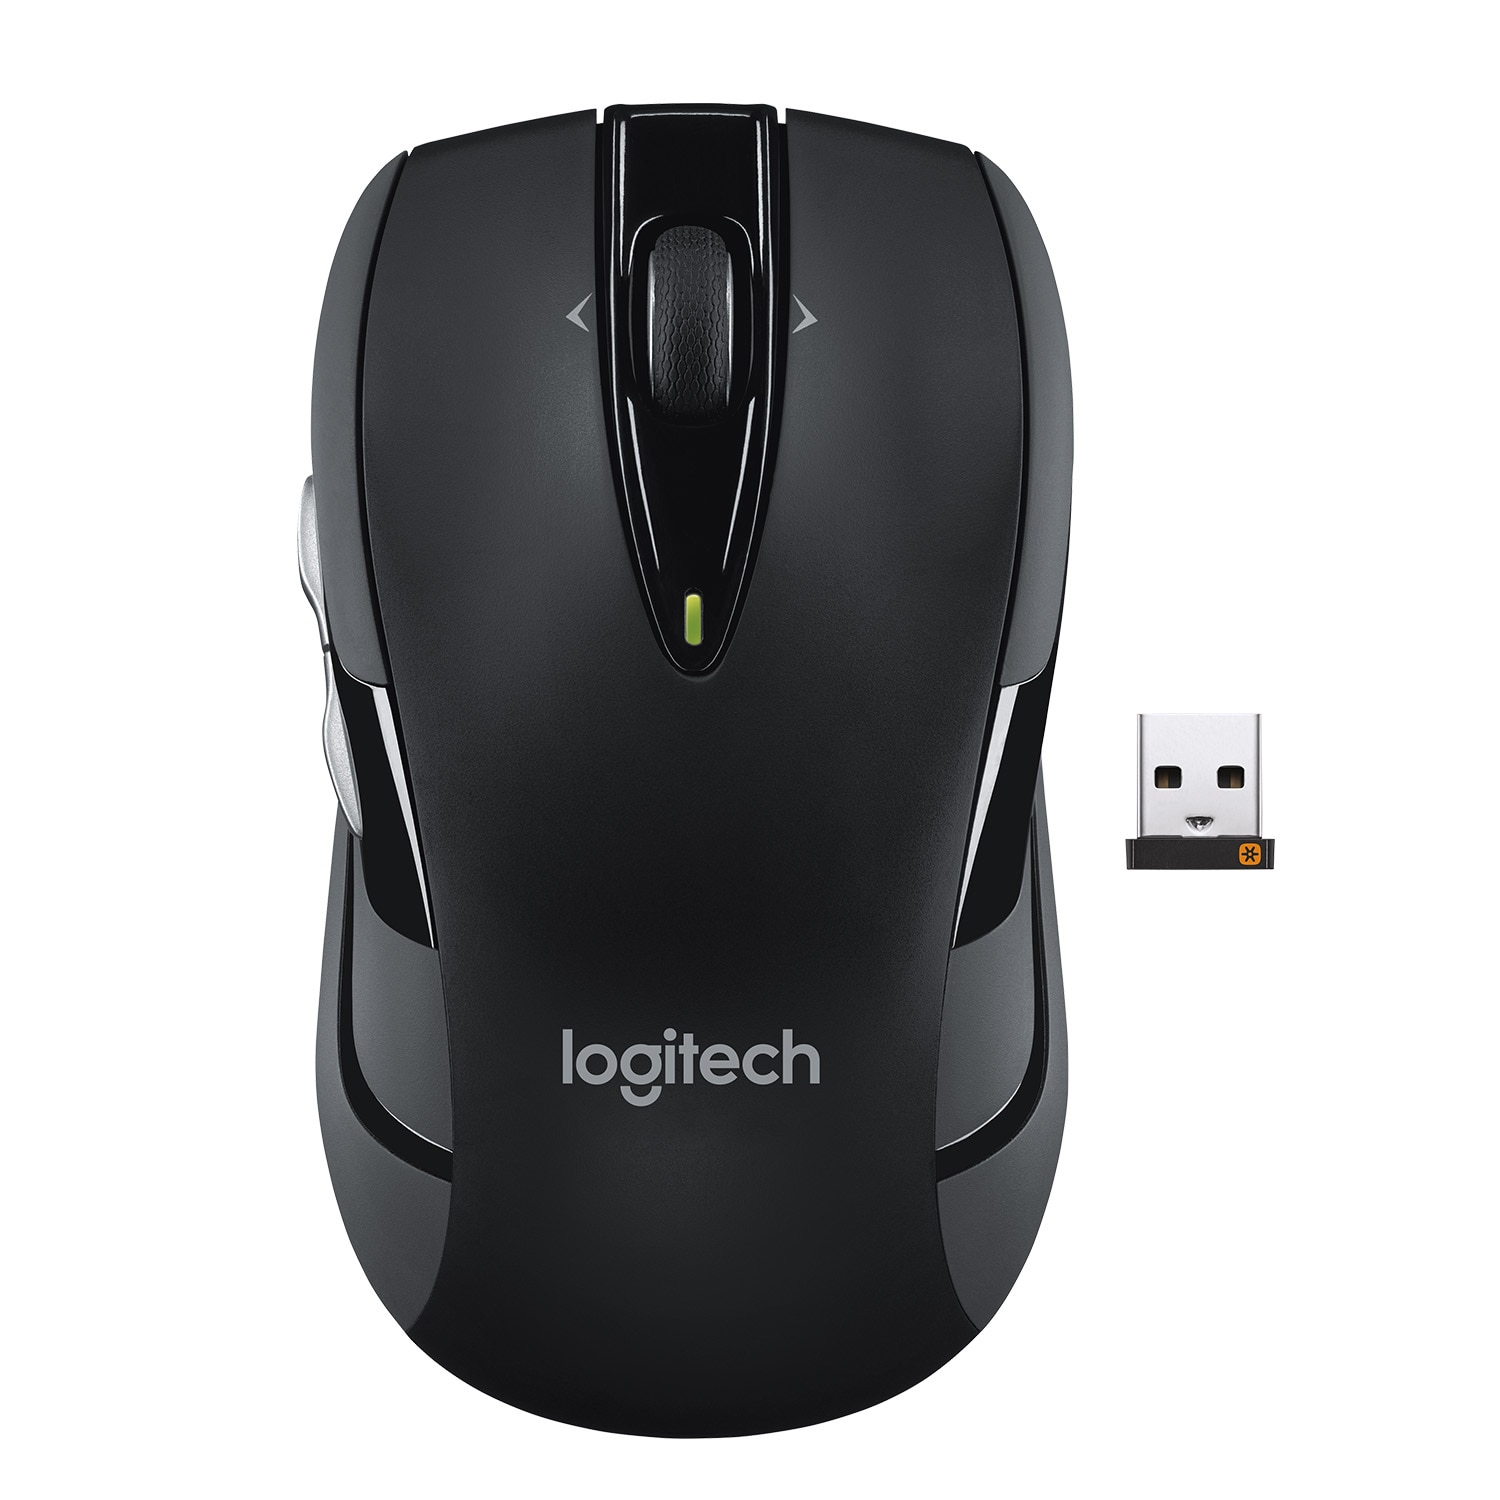 Logitech M545 trådløs mus (sort) | Elgiganten